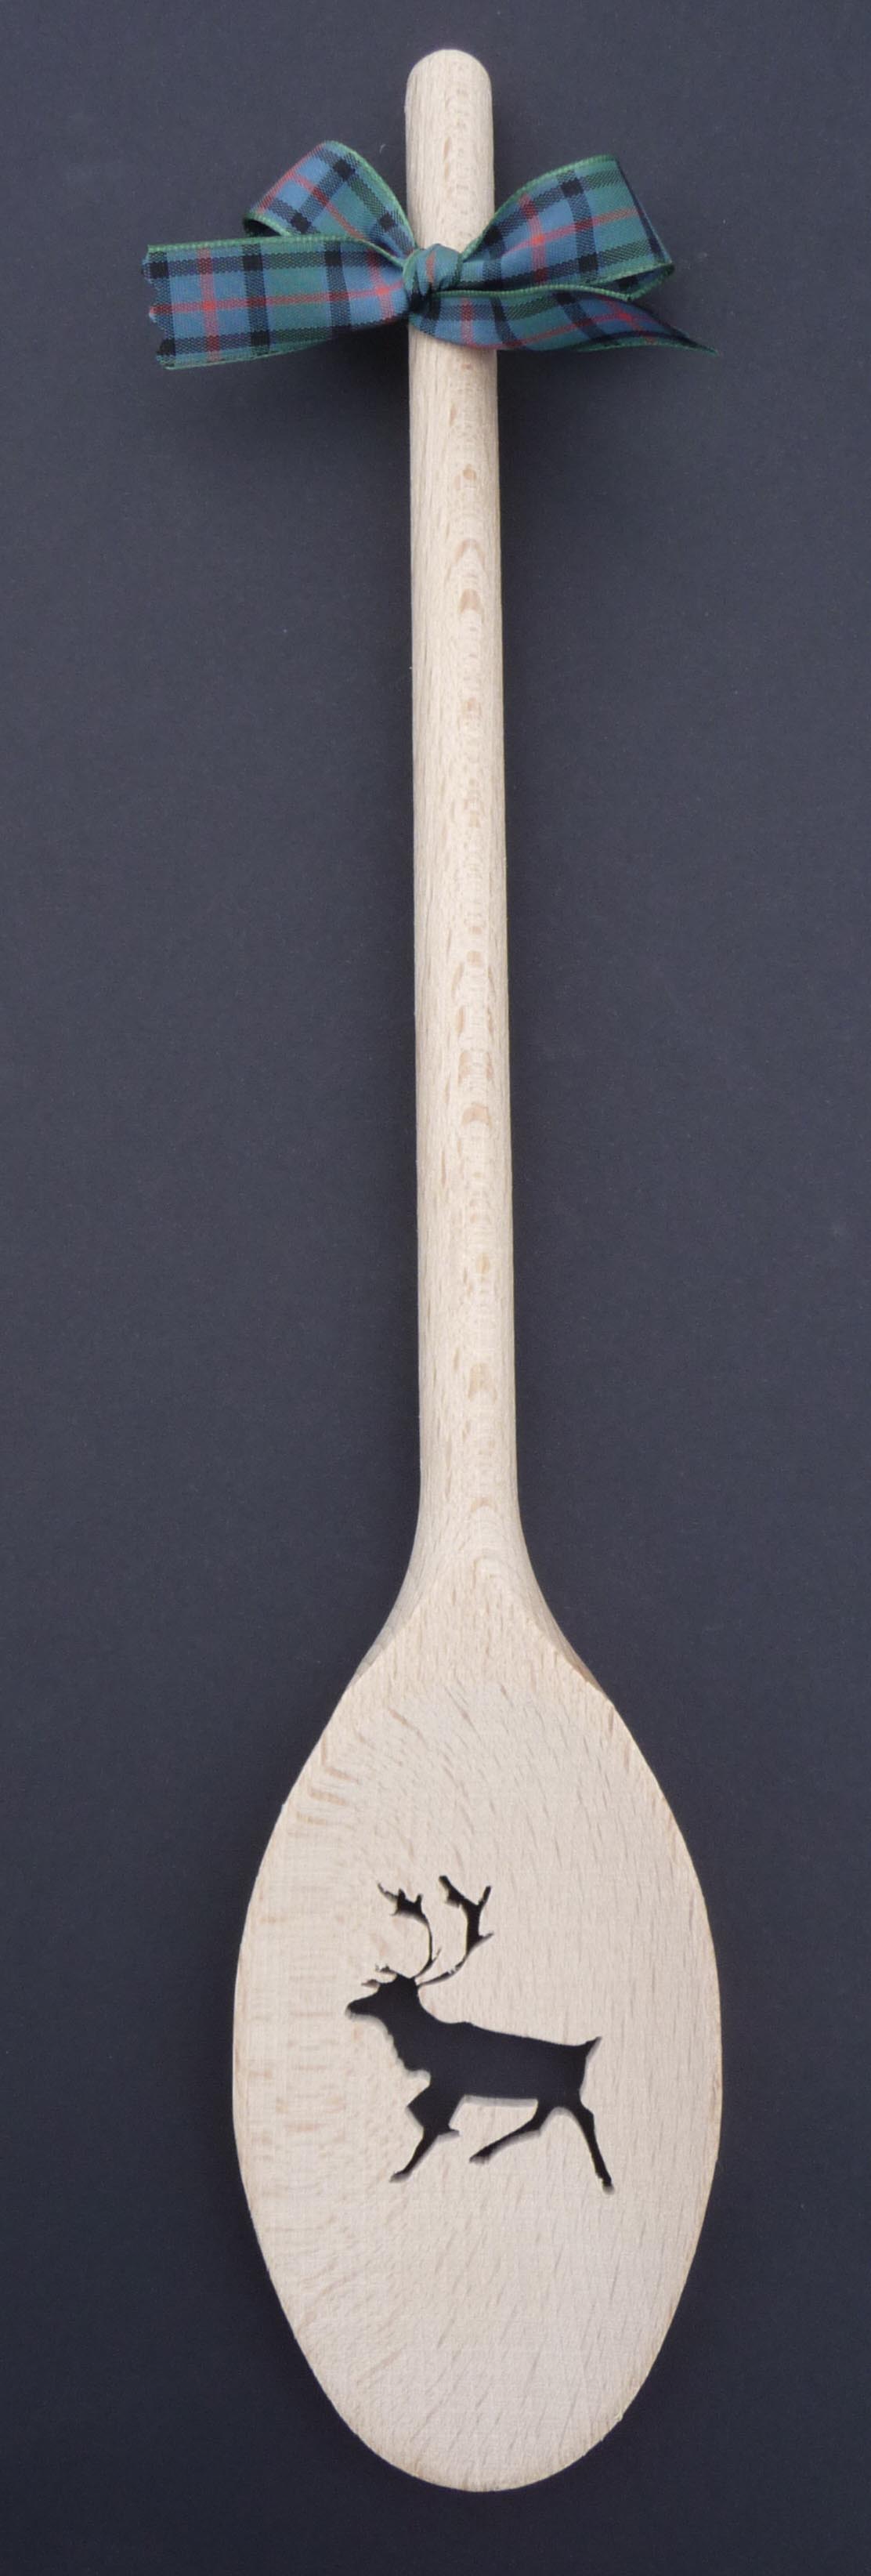 pig wooden spoon